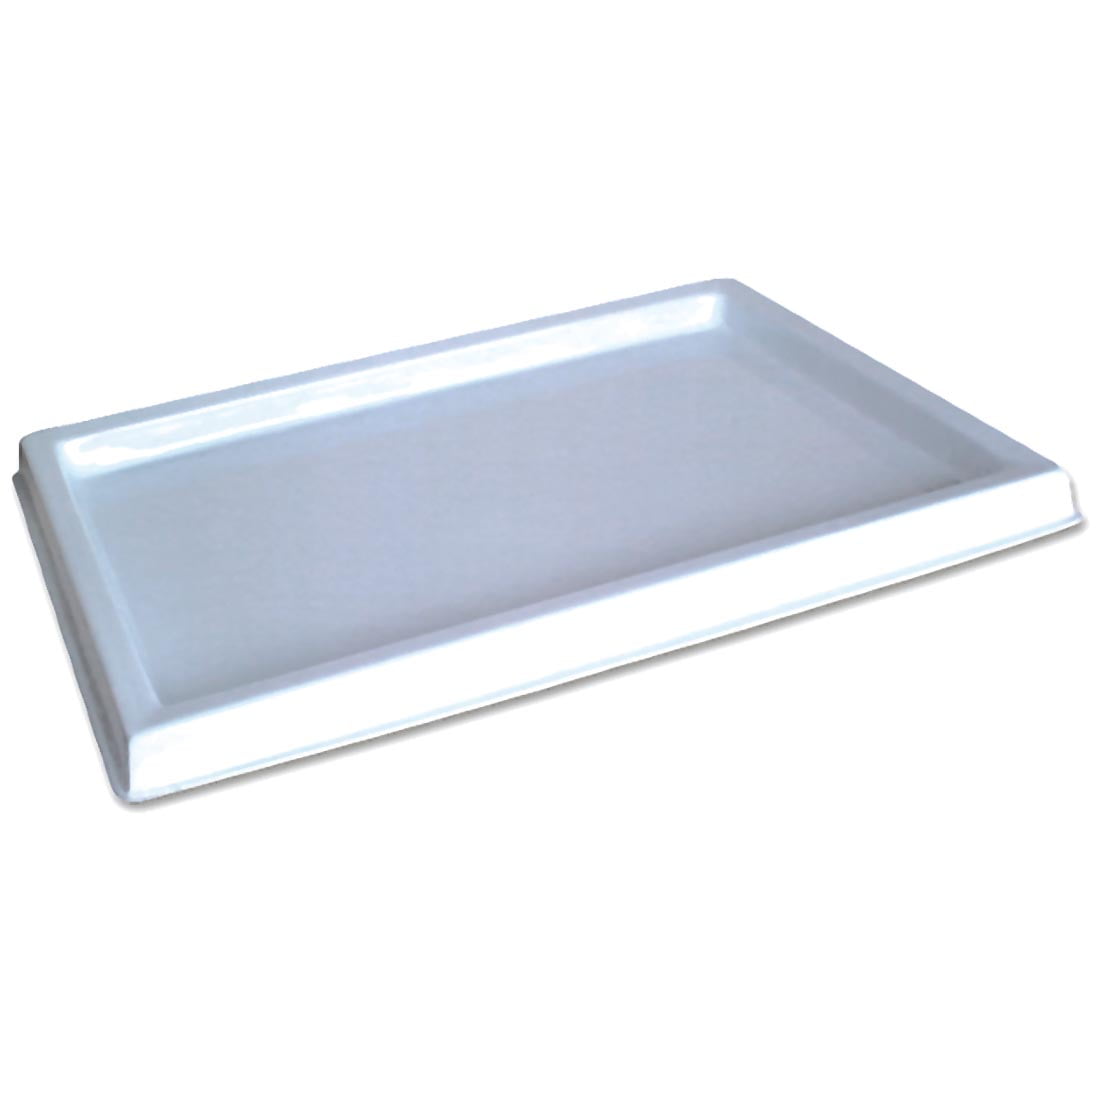 Richeson White Plastic Tray - 22-1/2 x 30-1/2 x 2